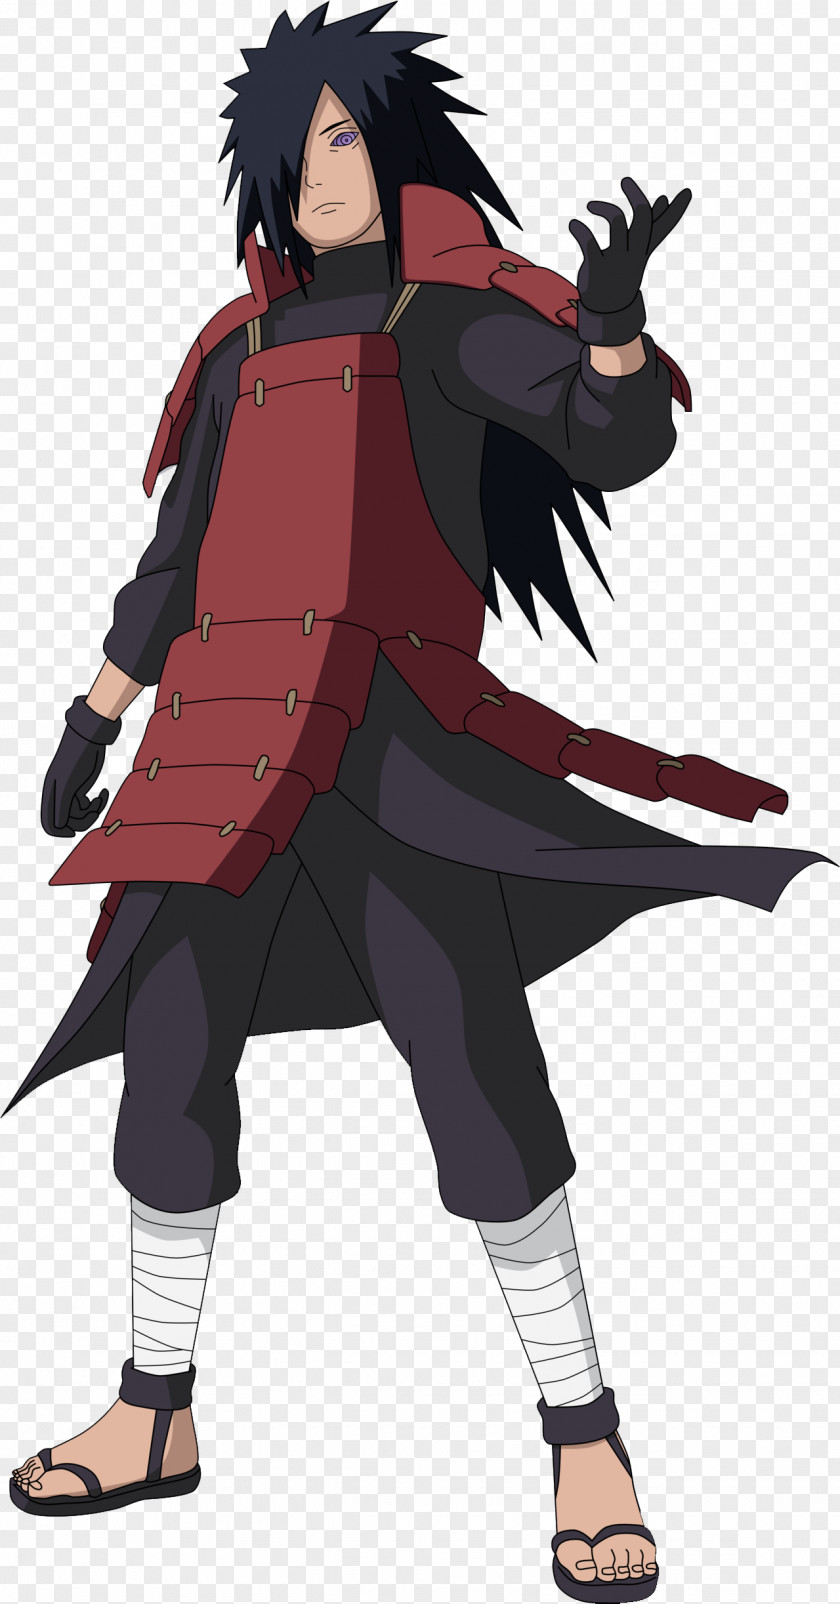 Ninja Madara Uchiha Obito Naruto Shippuden: Ultimate Storm 3 Clan Hashirama Senju PNG